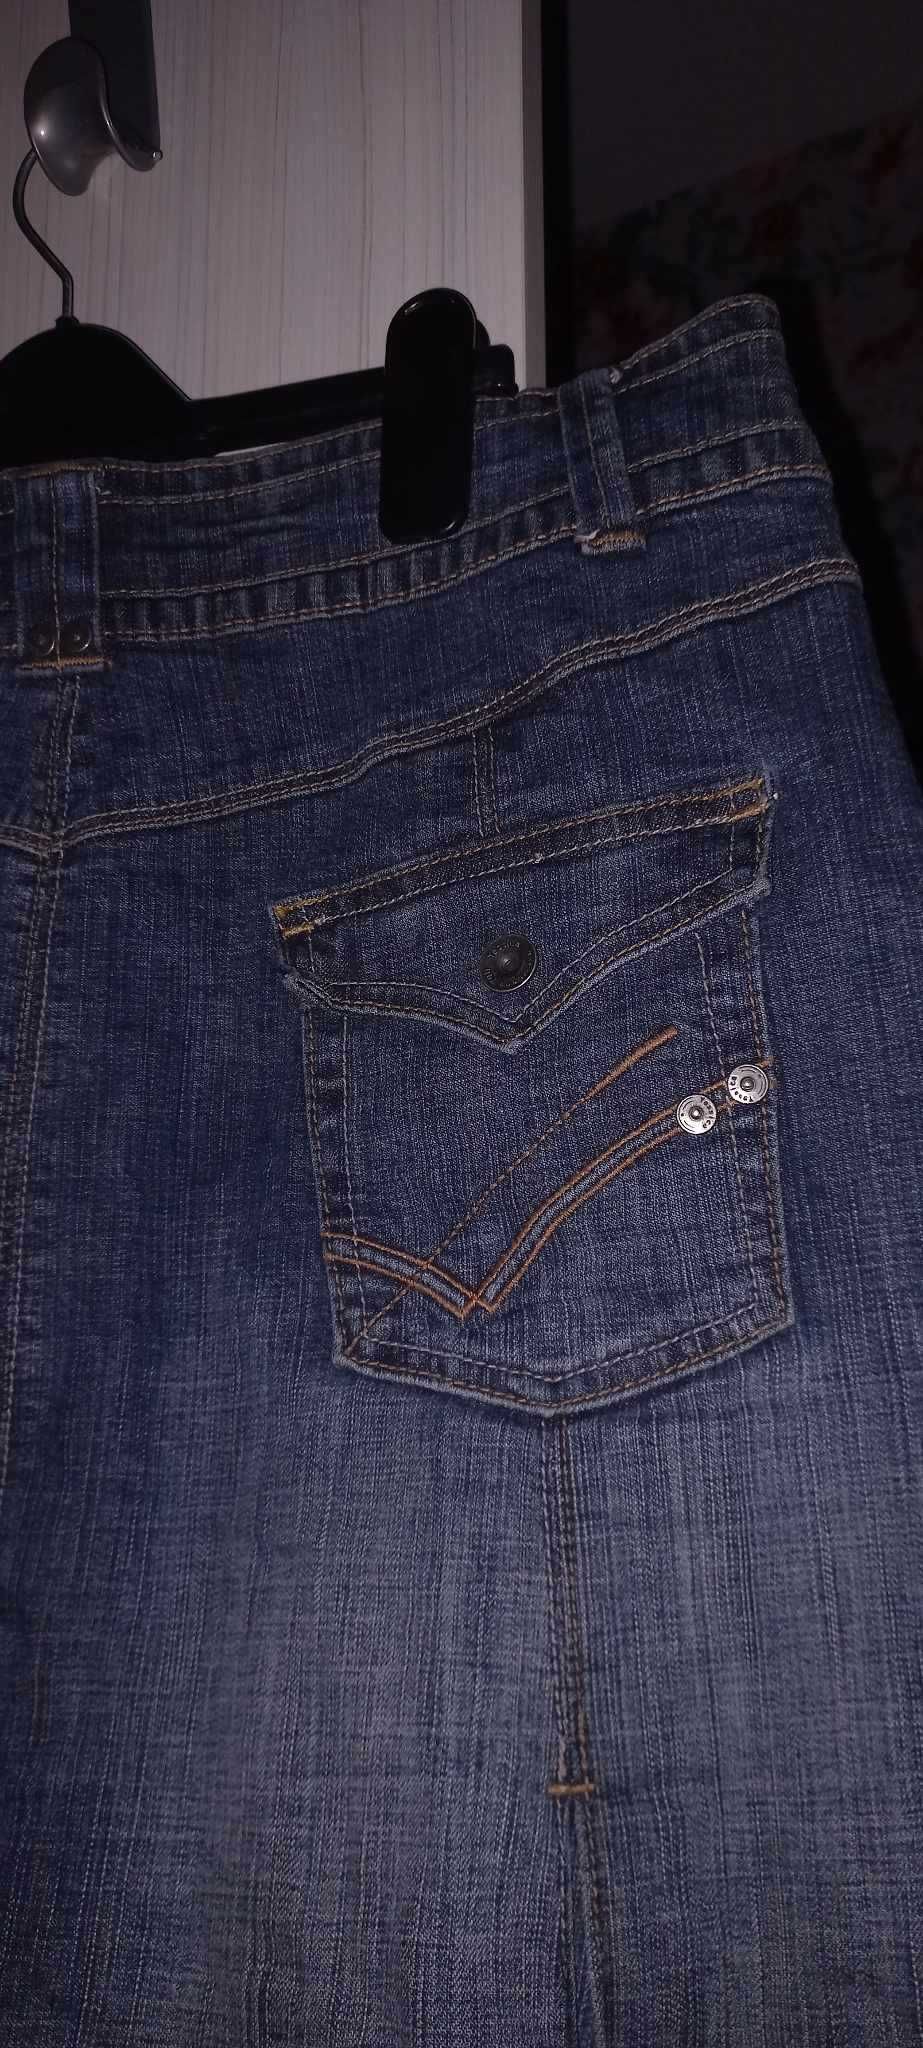 Spódnica jeansowa długa do kolan vintage retro aesthetic streetwear